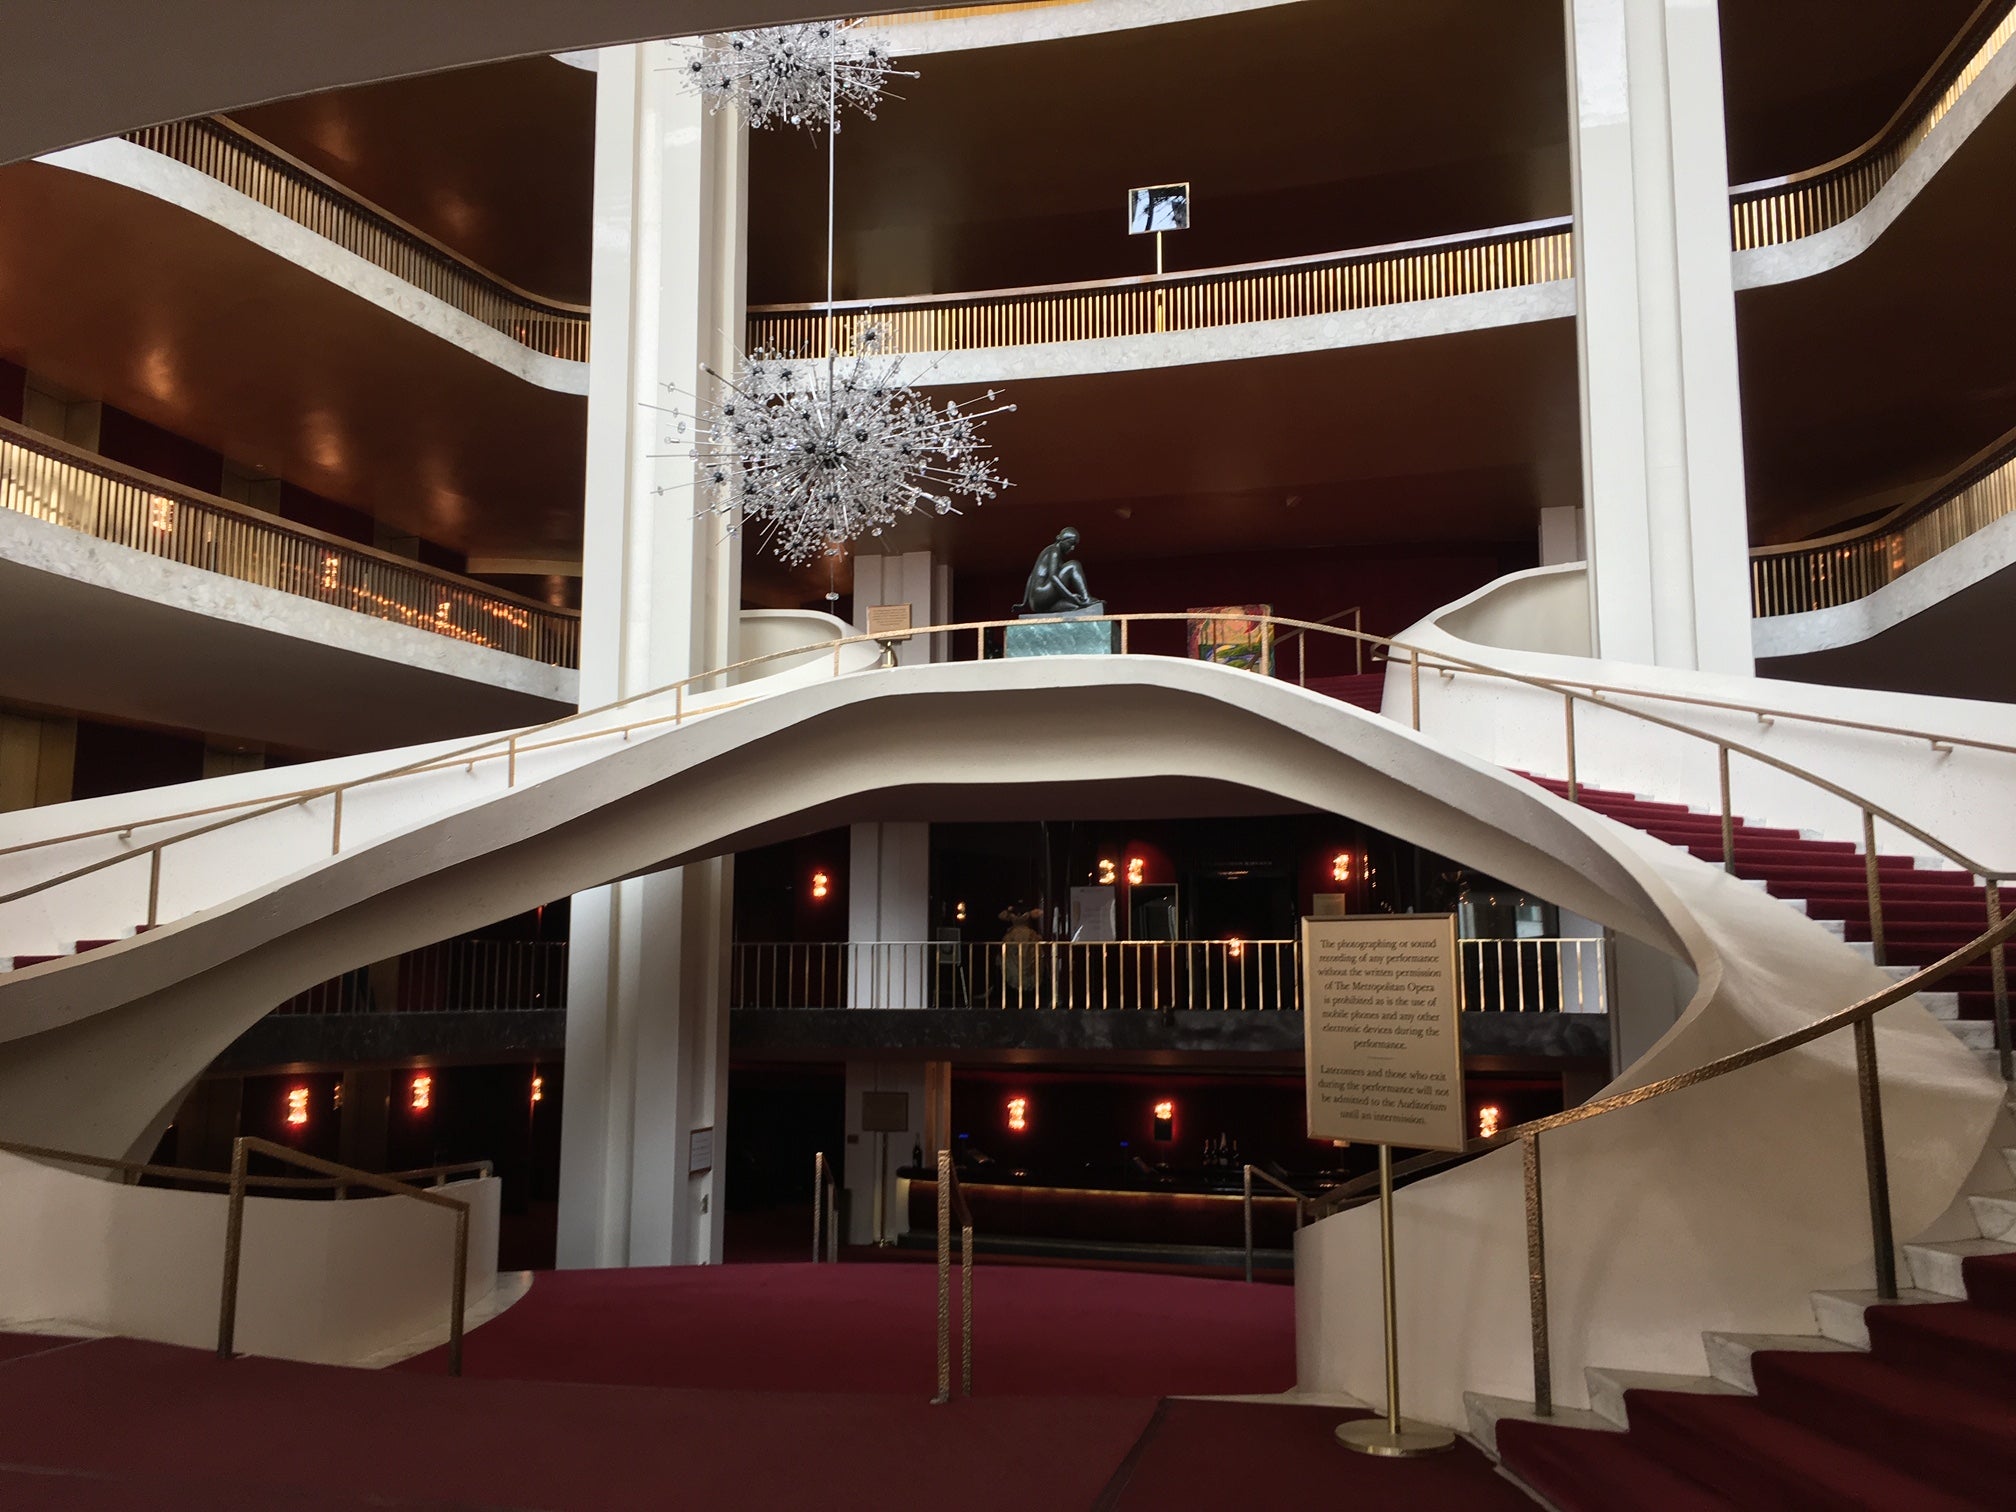 Lobby at The Metropolitan Opera, NYC